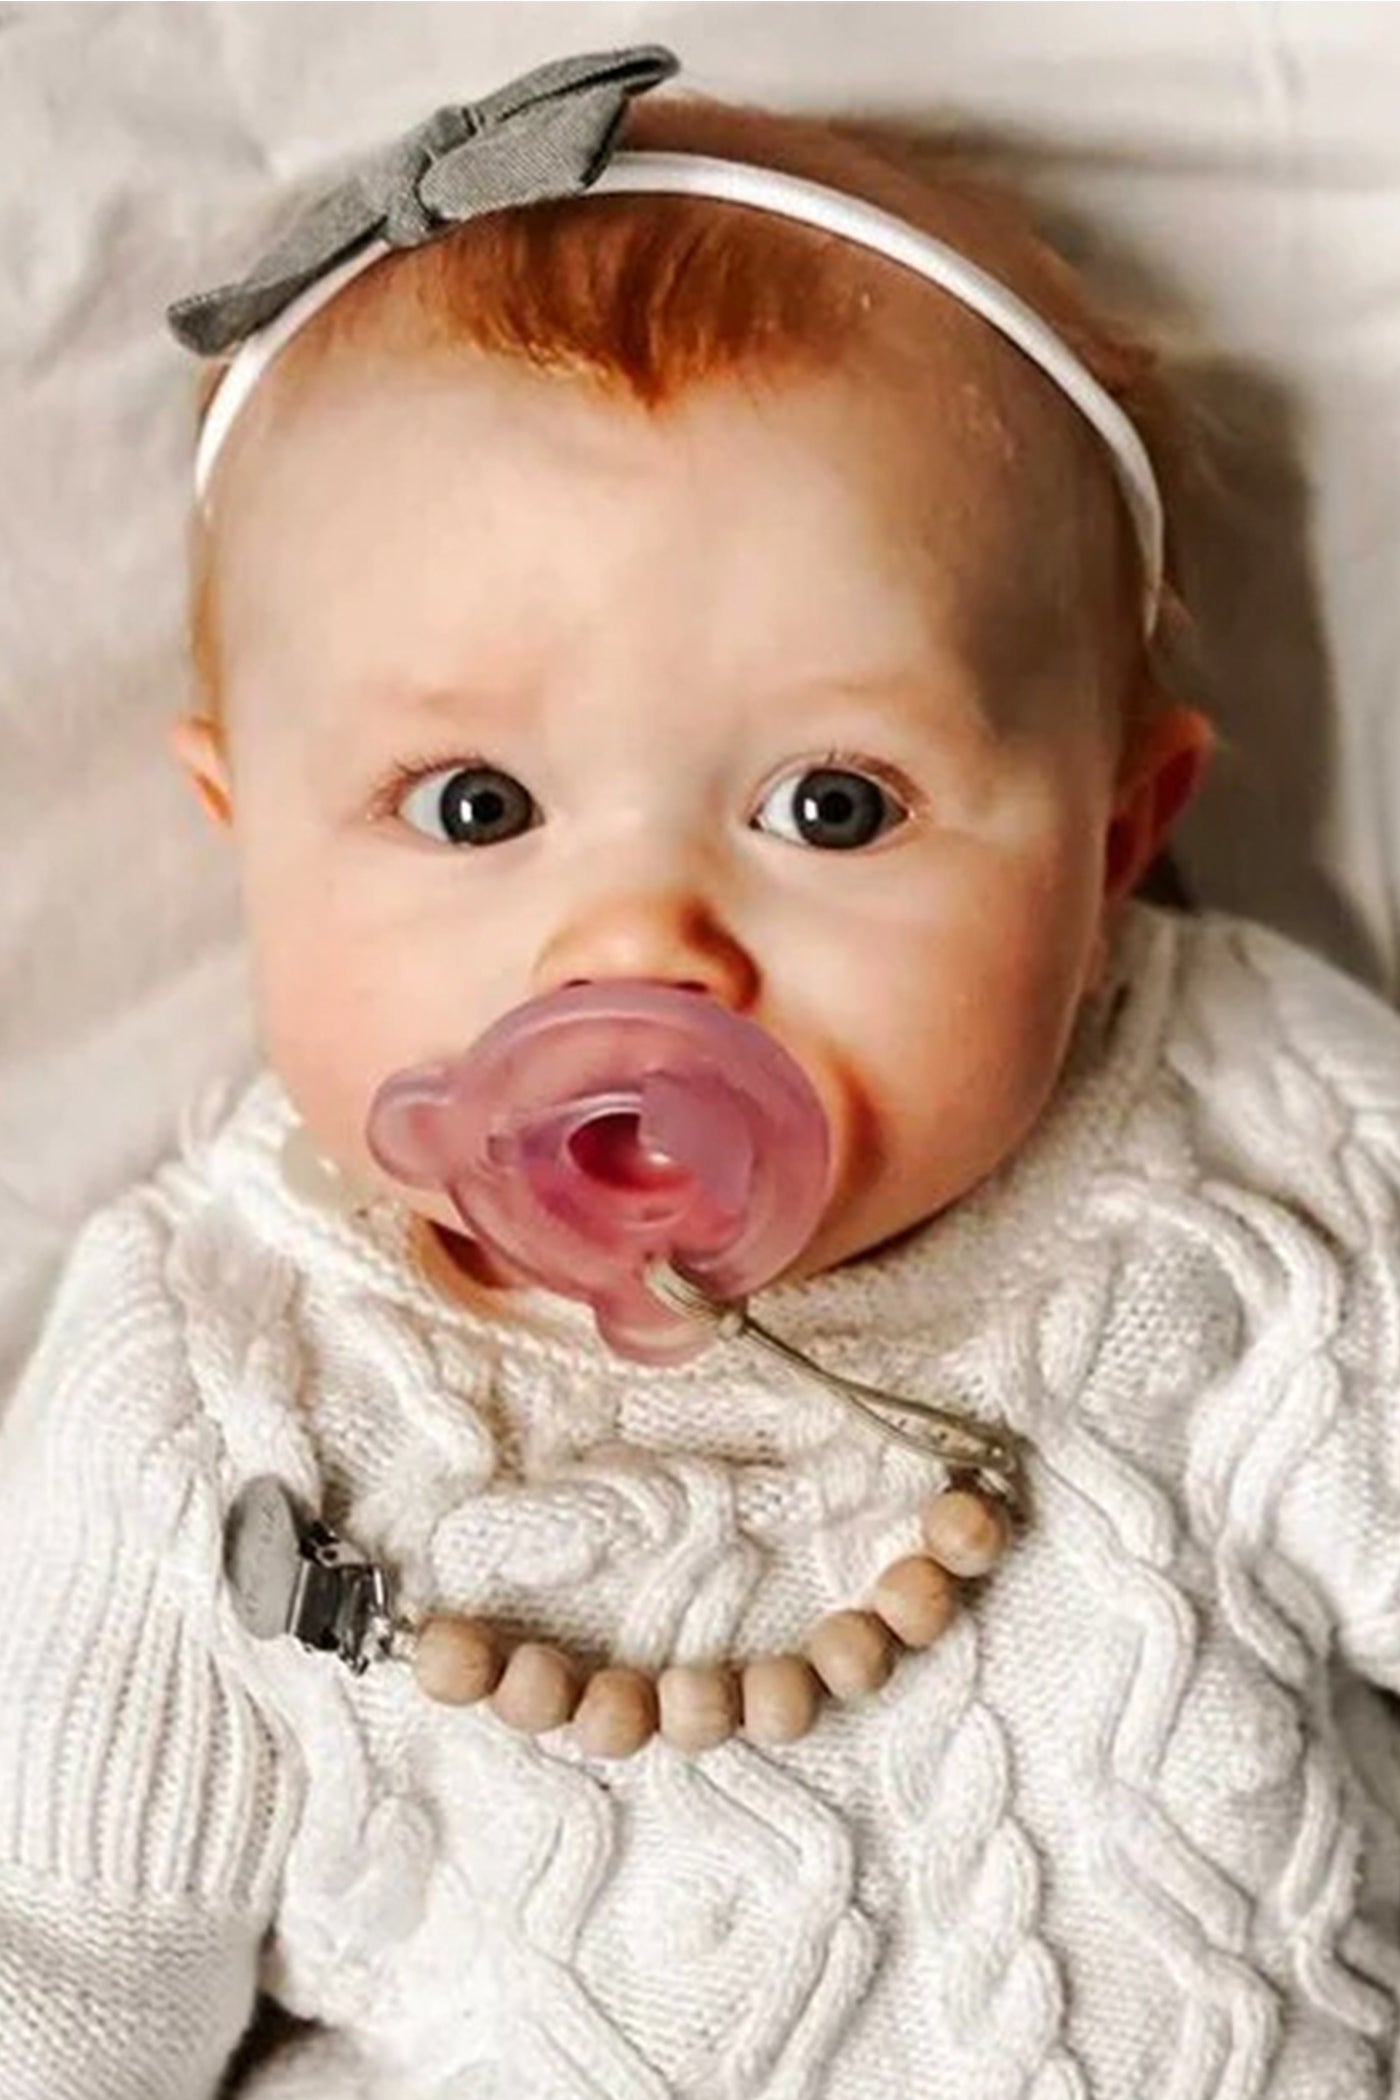 Beaded Baby Pacifer Clip Holder by Ali + Oli